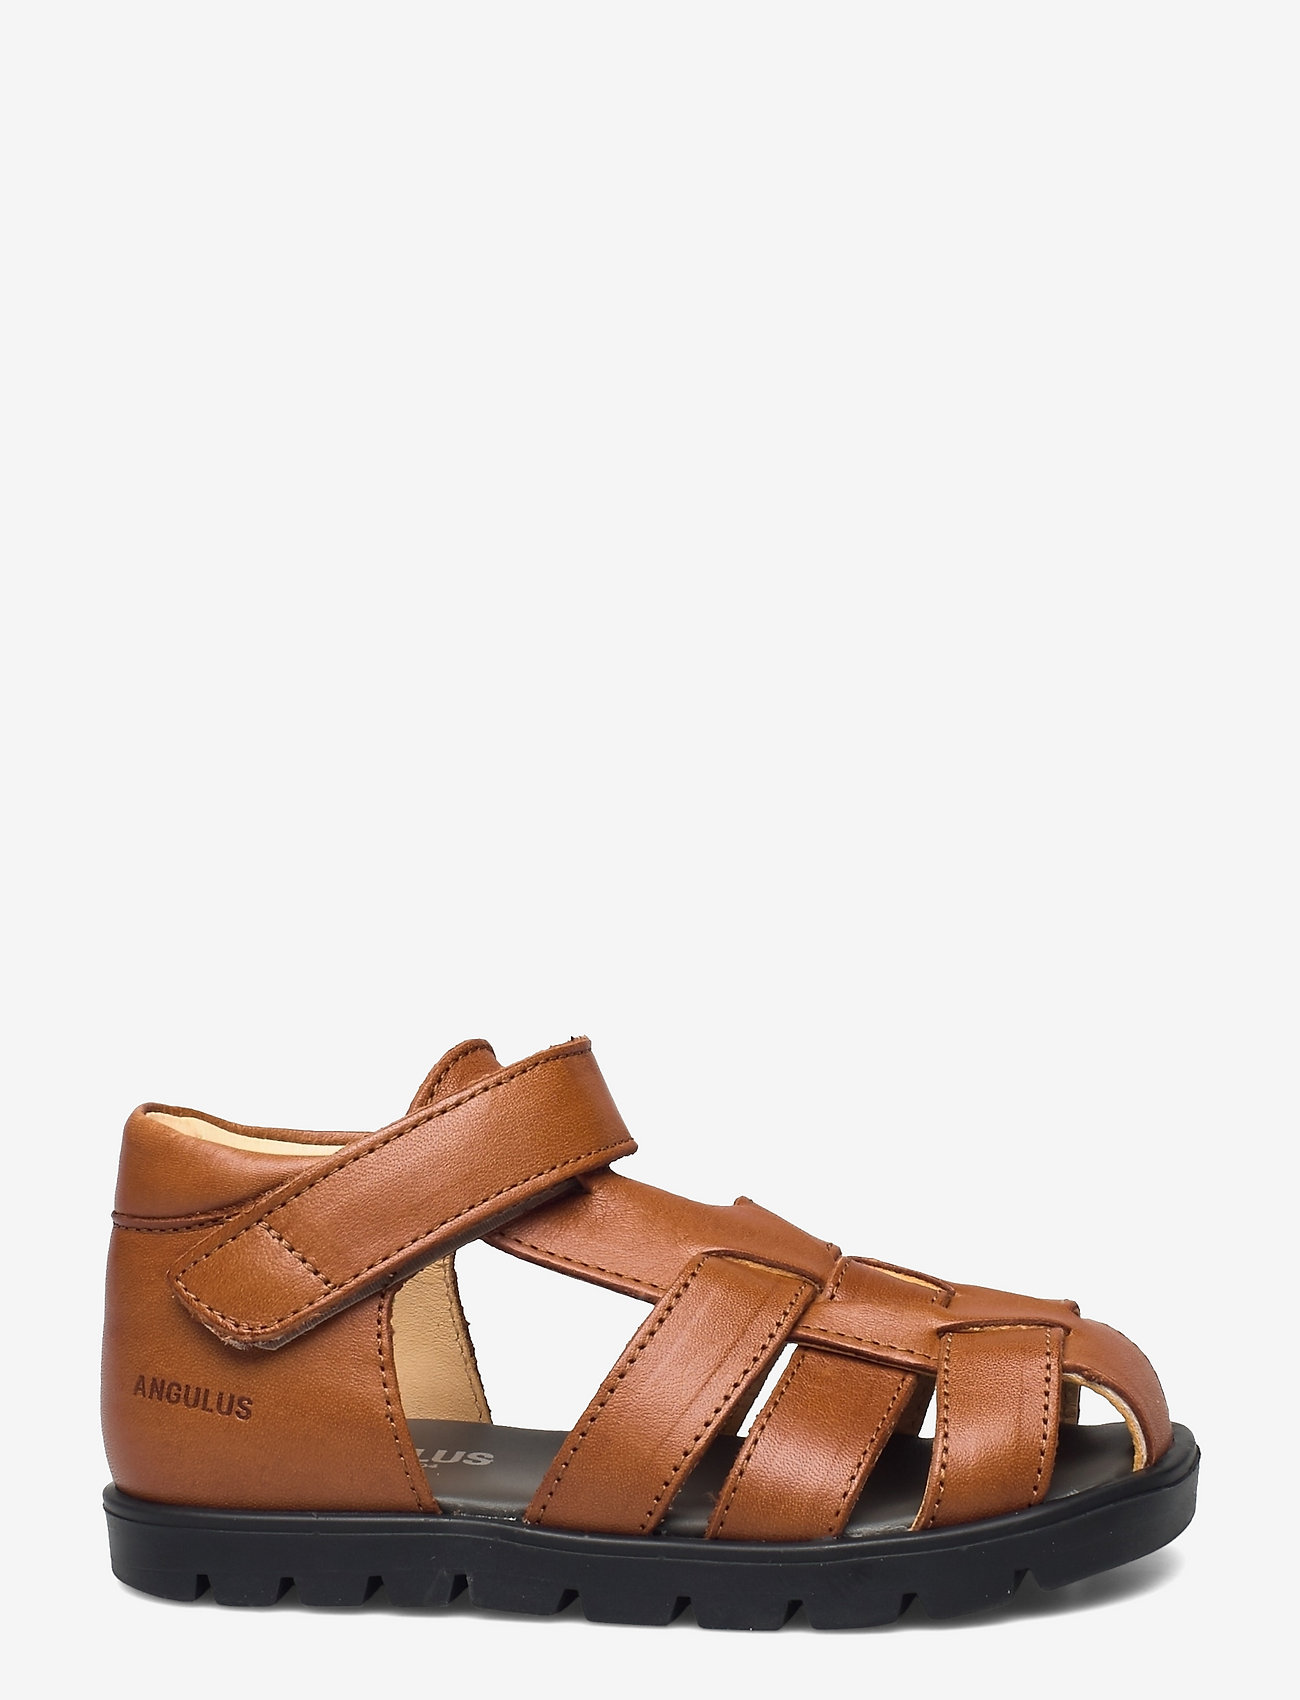 ANGULUS - Sandals - flat - closed toe -  - 1545 cognac - 1